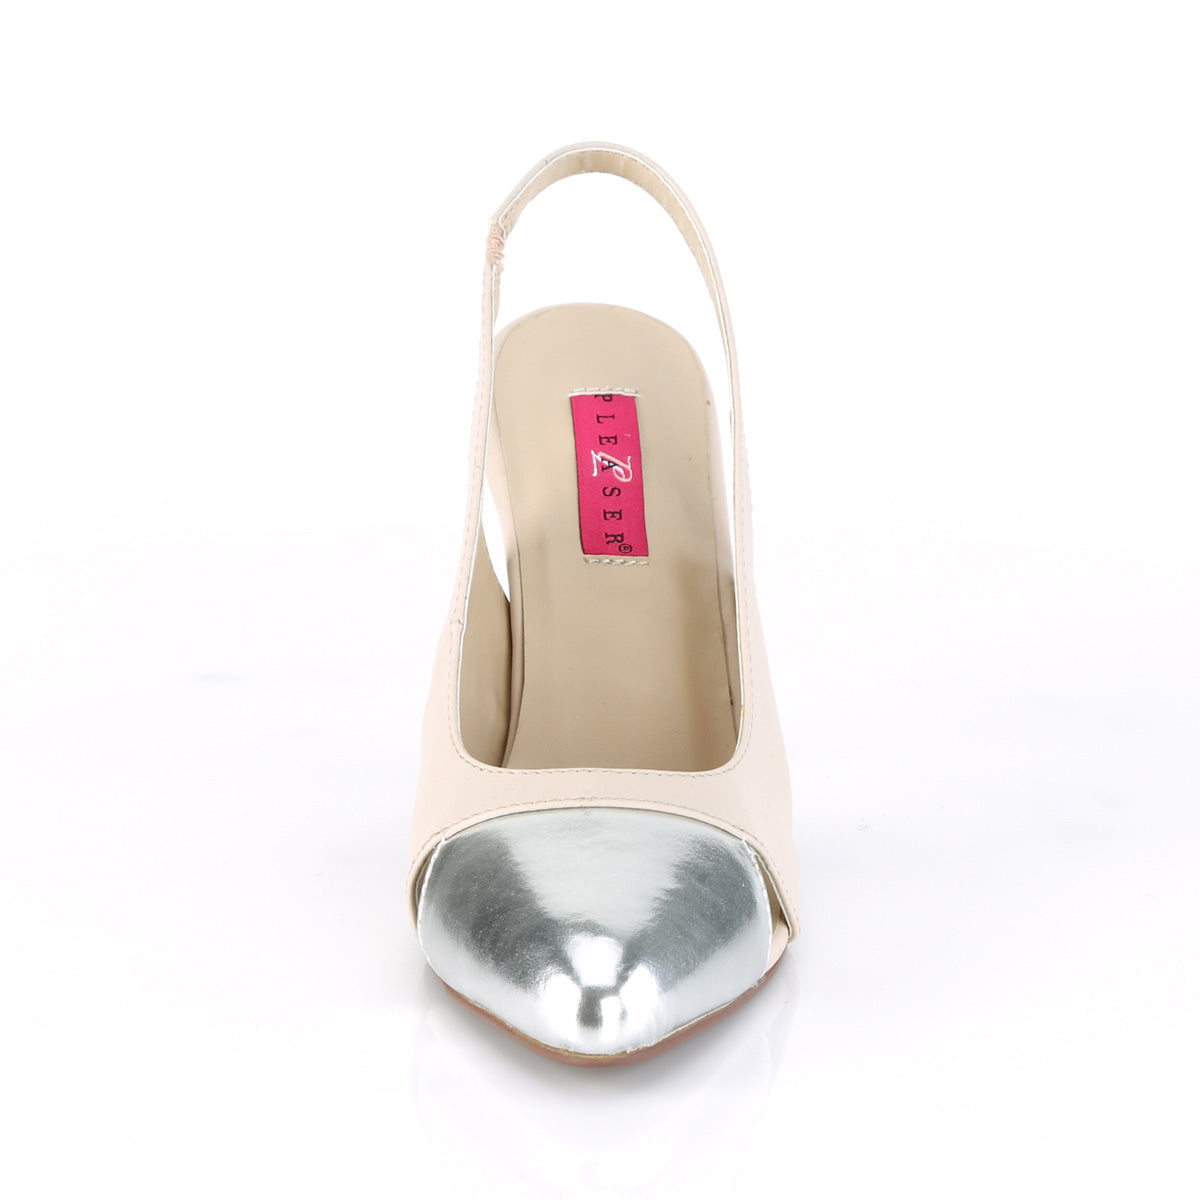 A New Day Women's Nala Pumps Heels Size 6.5 Silver | eBay